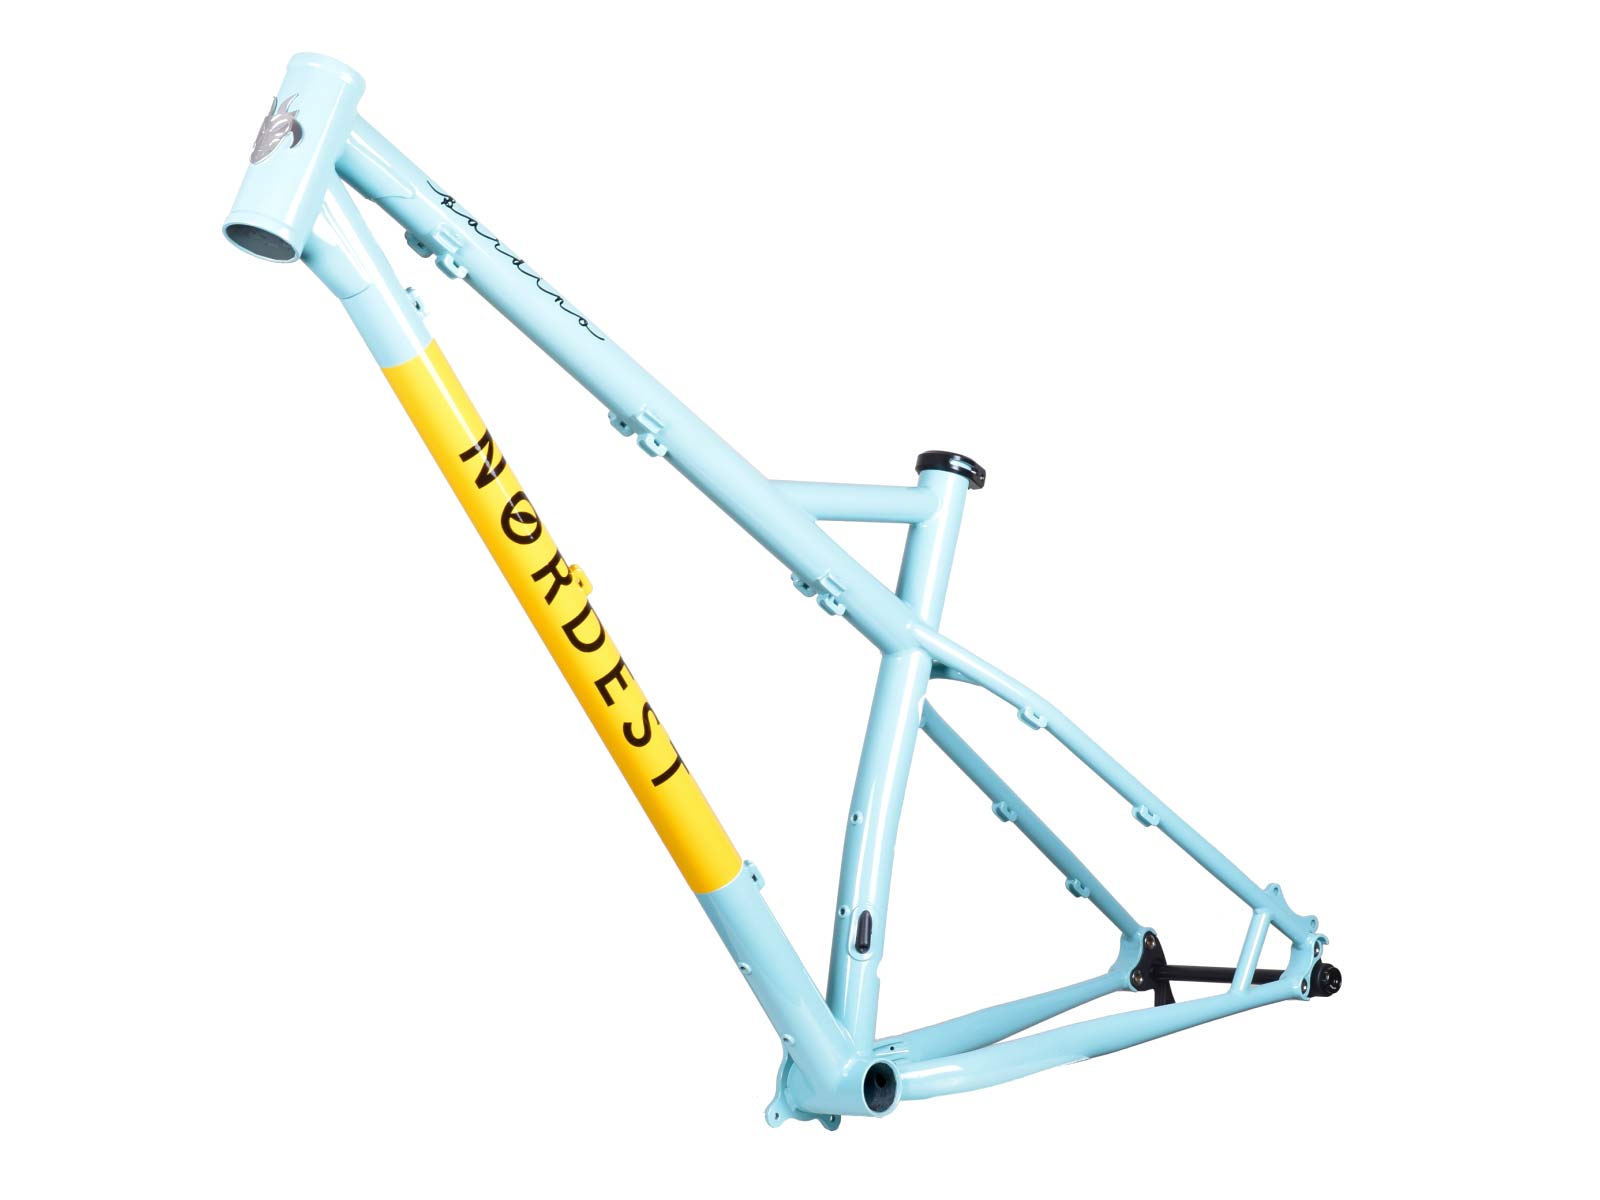 Nordest Bardino 2 MTB hardtail, updated affordable 4130 steel enduro hardtail all mountain bike frame